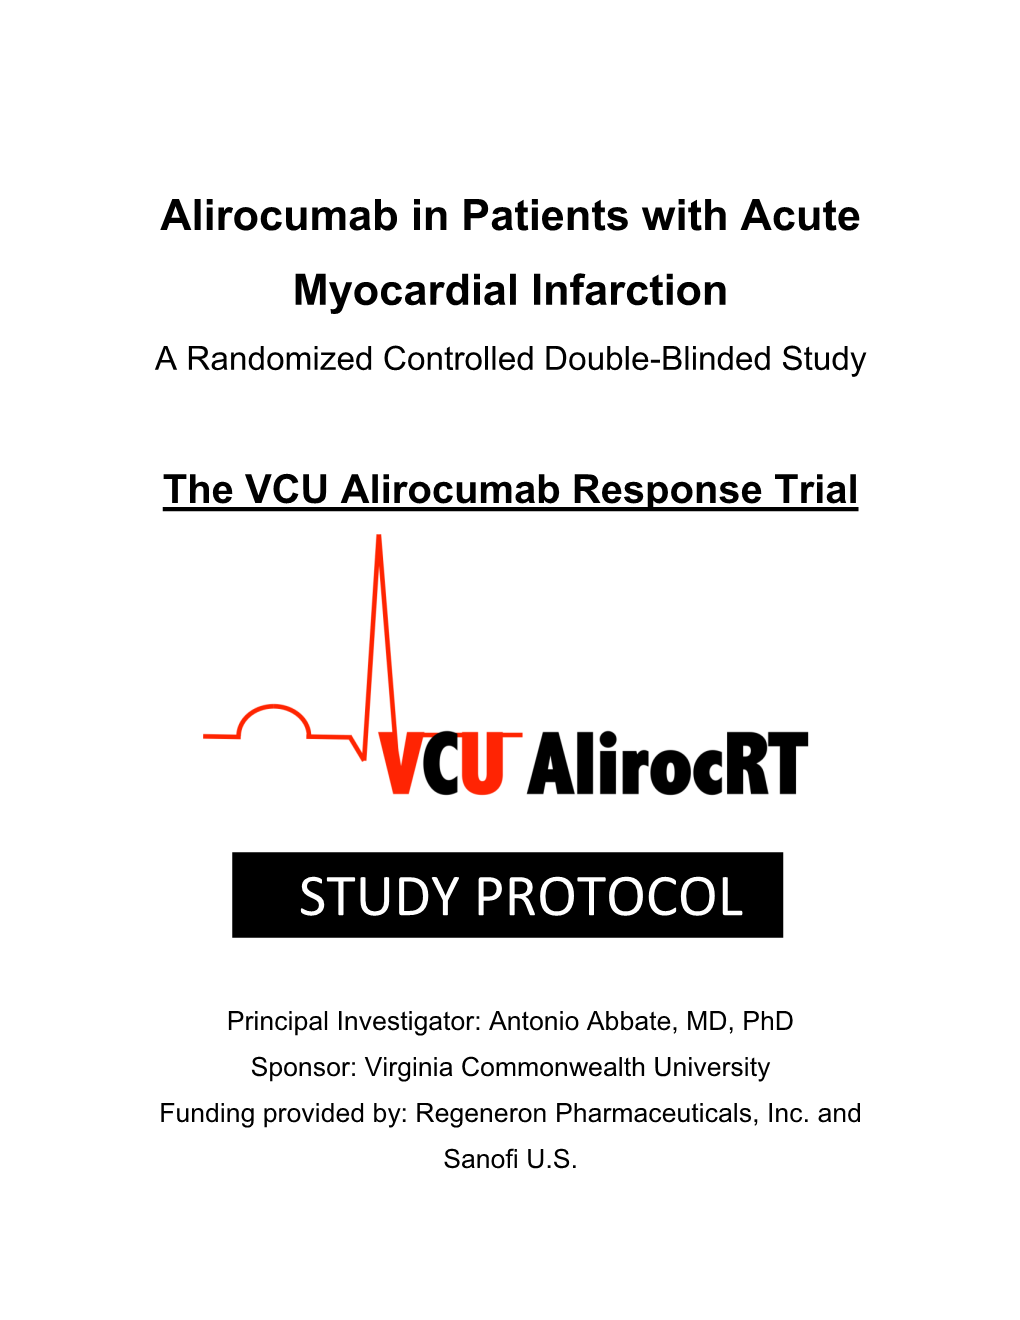 The VCU Alirocumab Response Trial